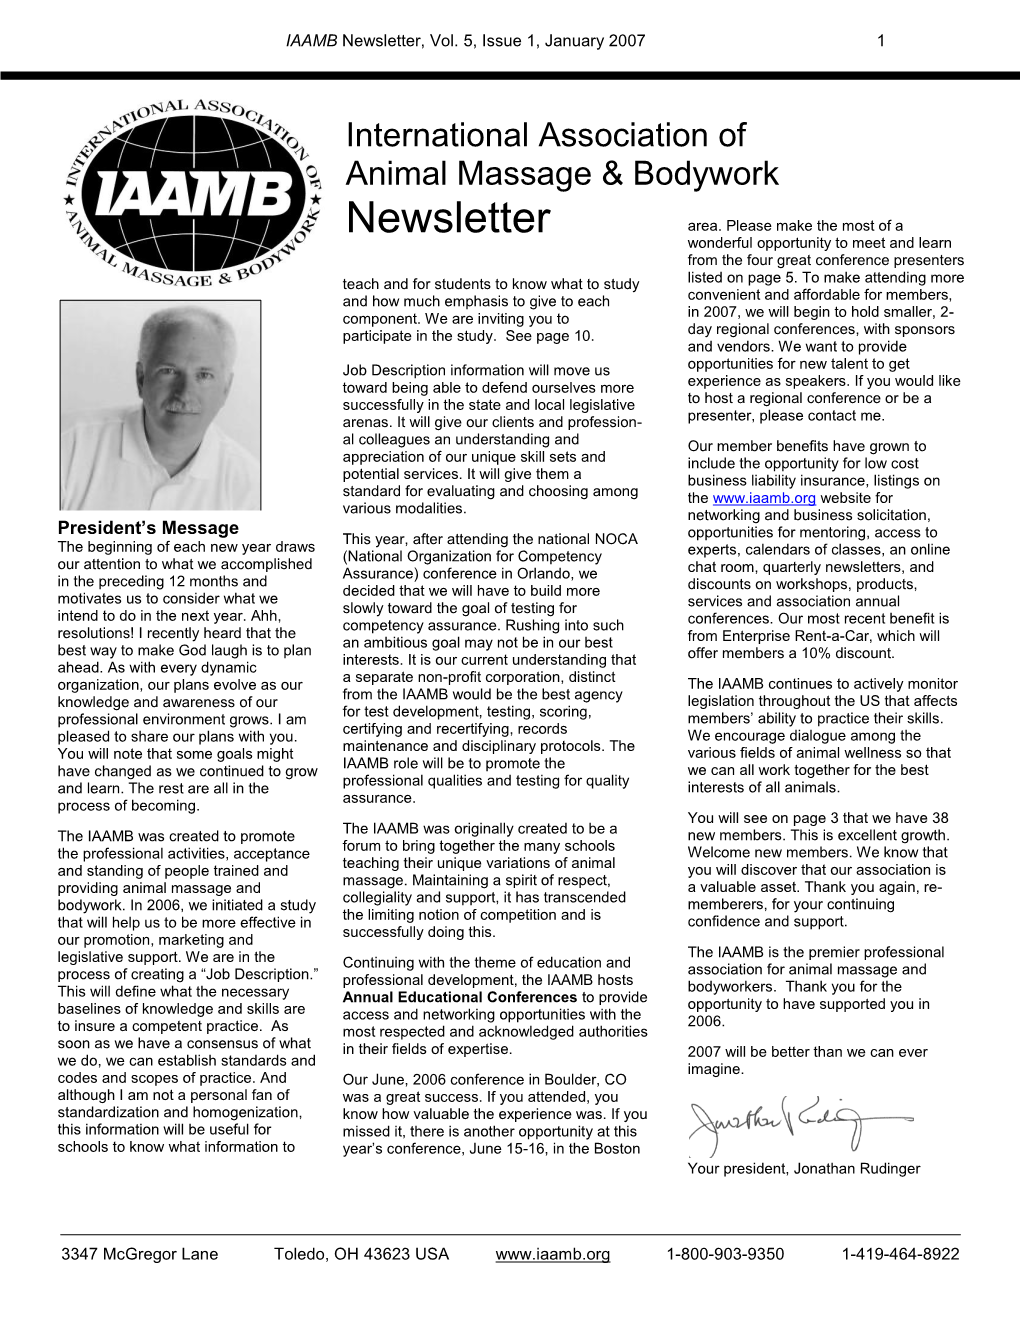 IAAMB Newsletter, Issue 1